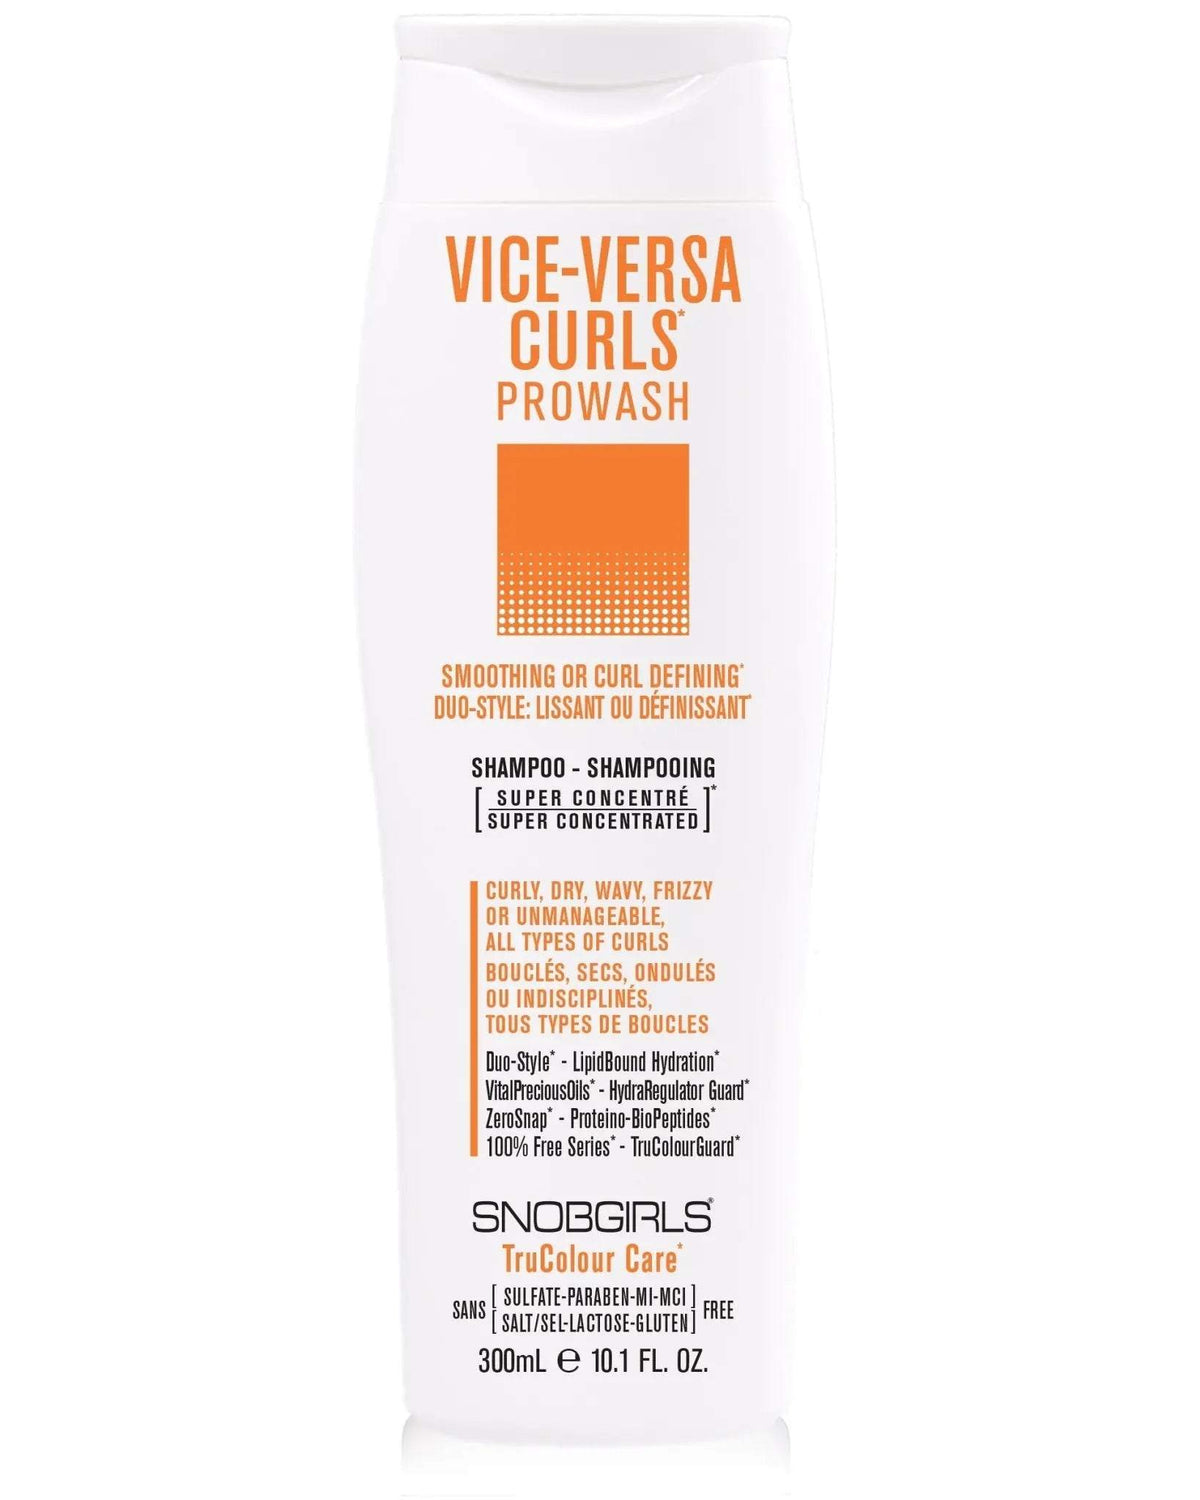 VICE-VERSA CURLS Prowash (shampoo) 300 mL - SNOBGIRLS Canada